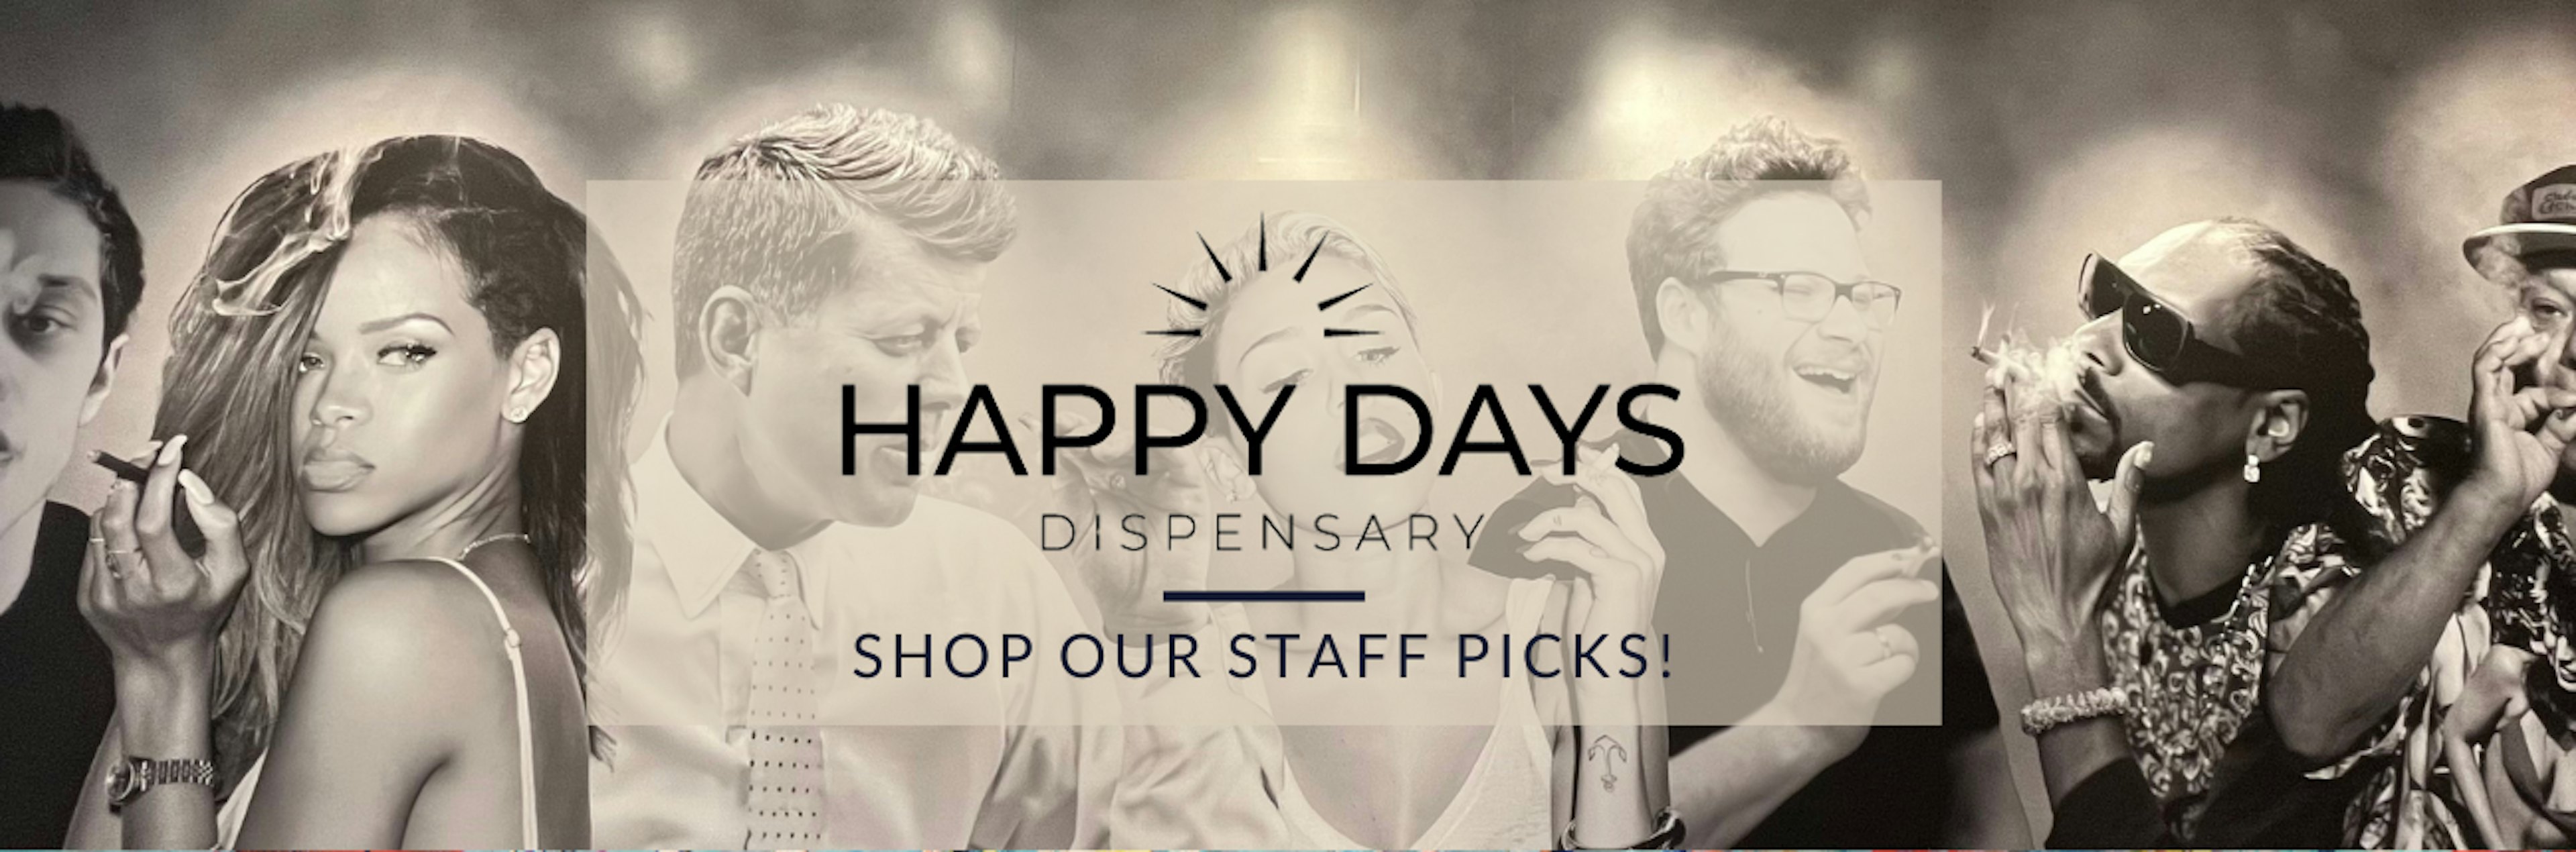 Happy Days Dispensary Staff Picks